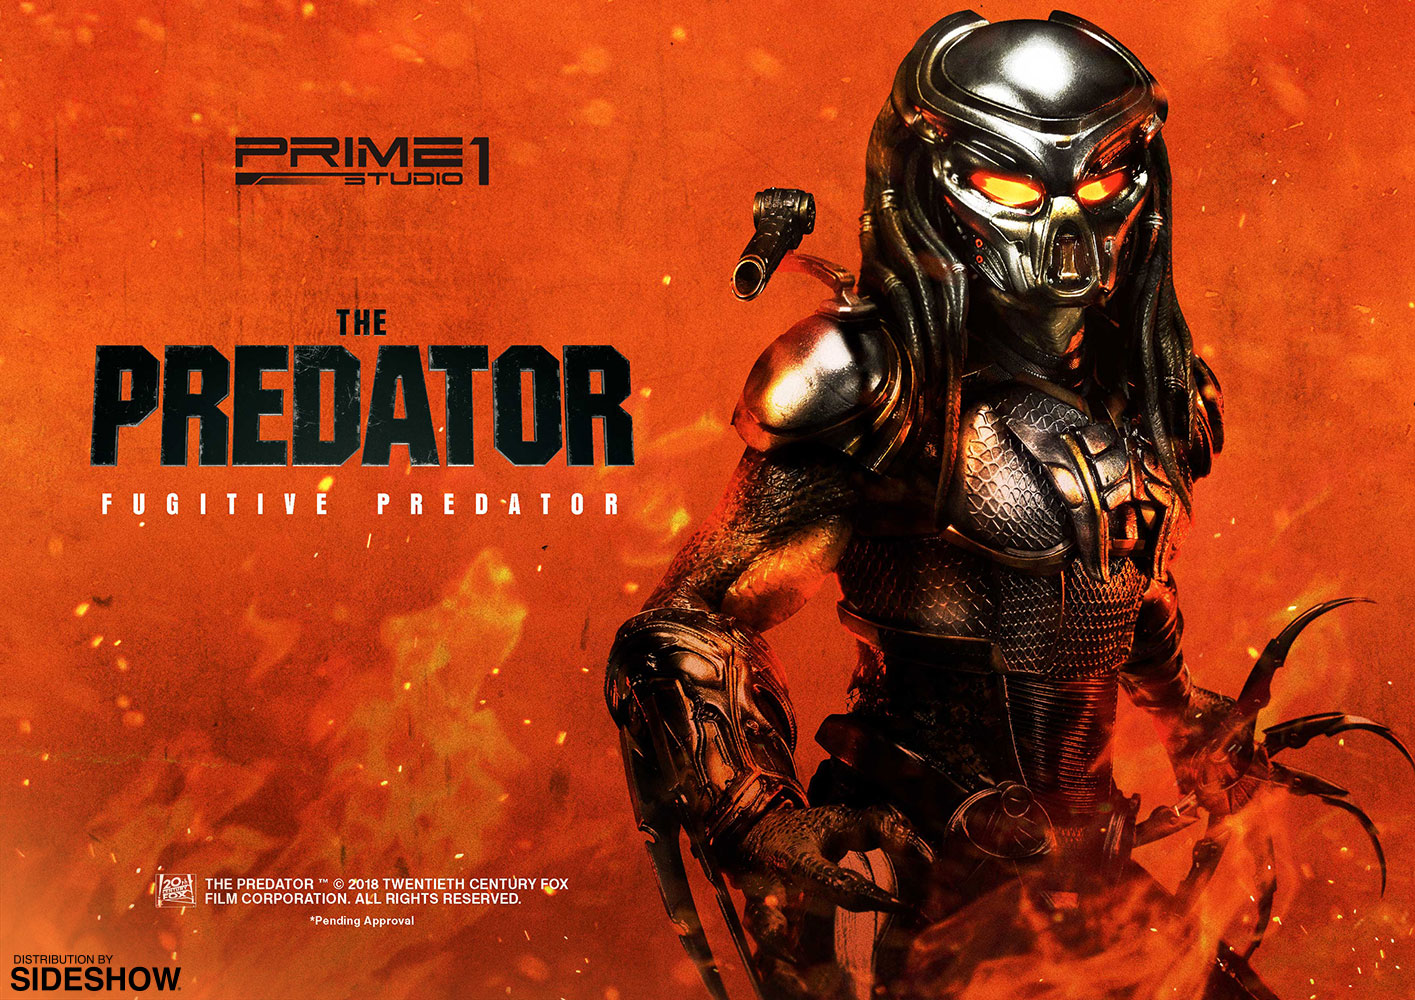 Fugitive Predator Deluxe Version- Prototype Shown